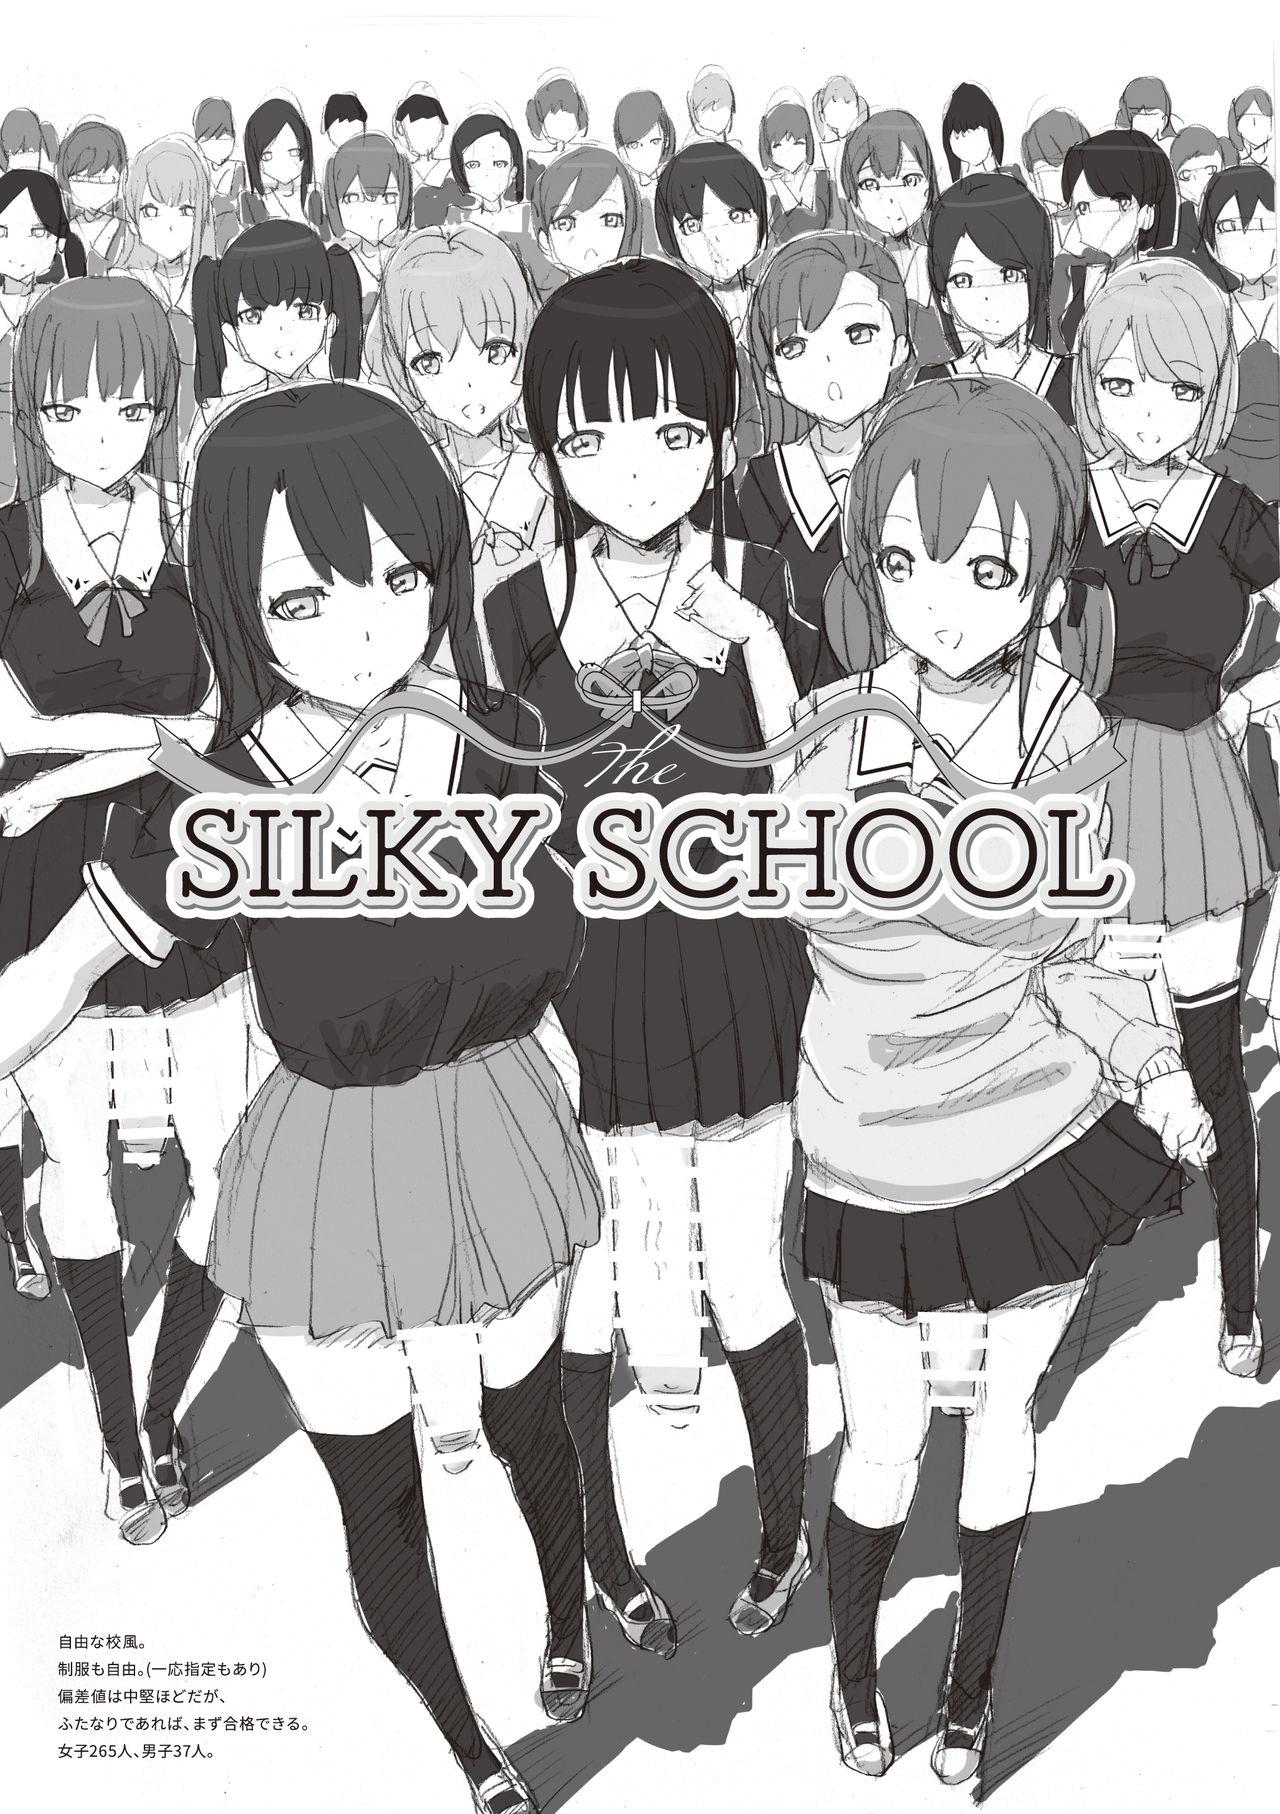 The SILKY SCHOOL 0